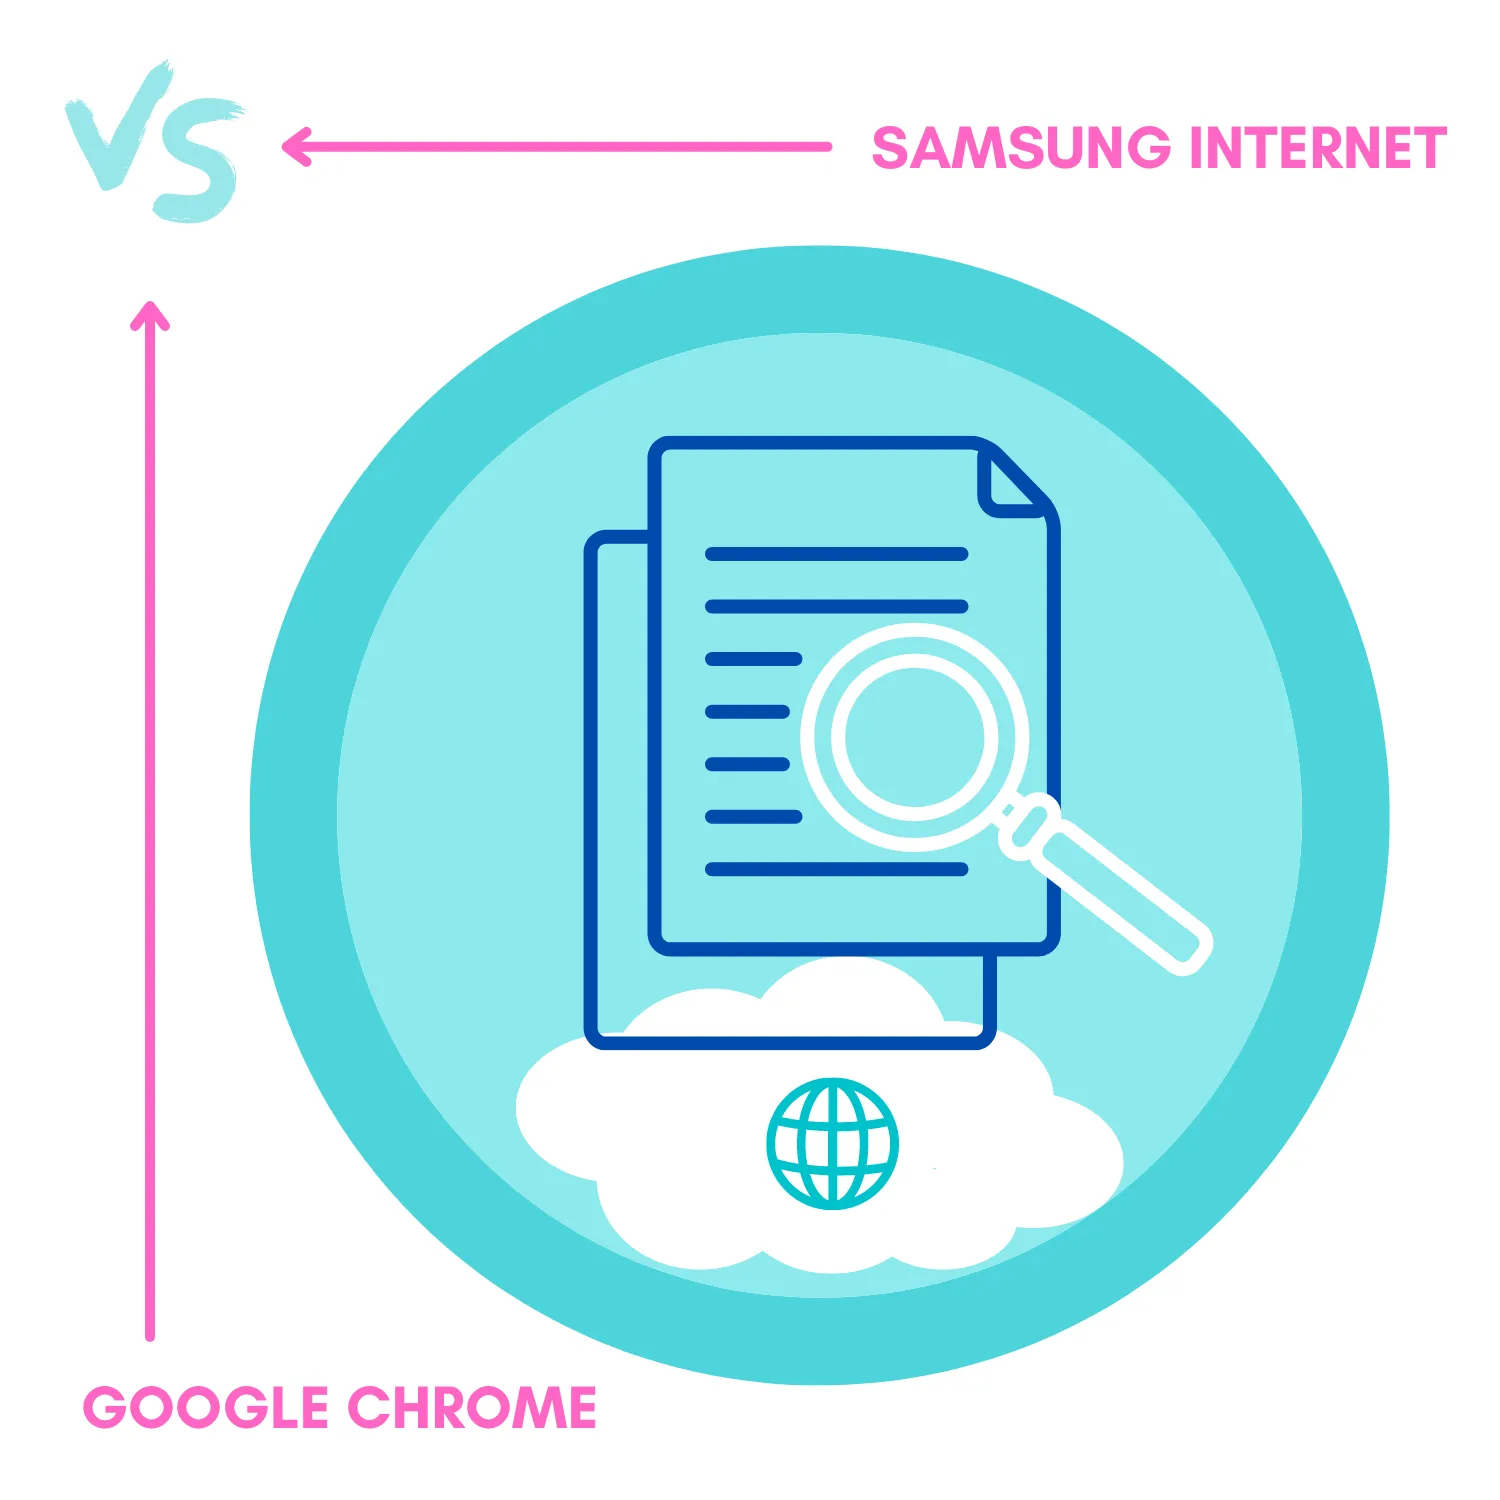 Samsung Internet vs. Google Chrome